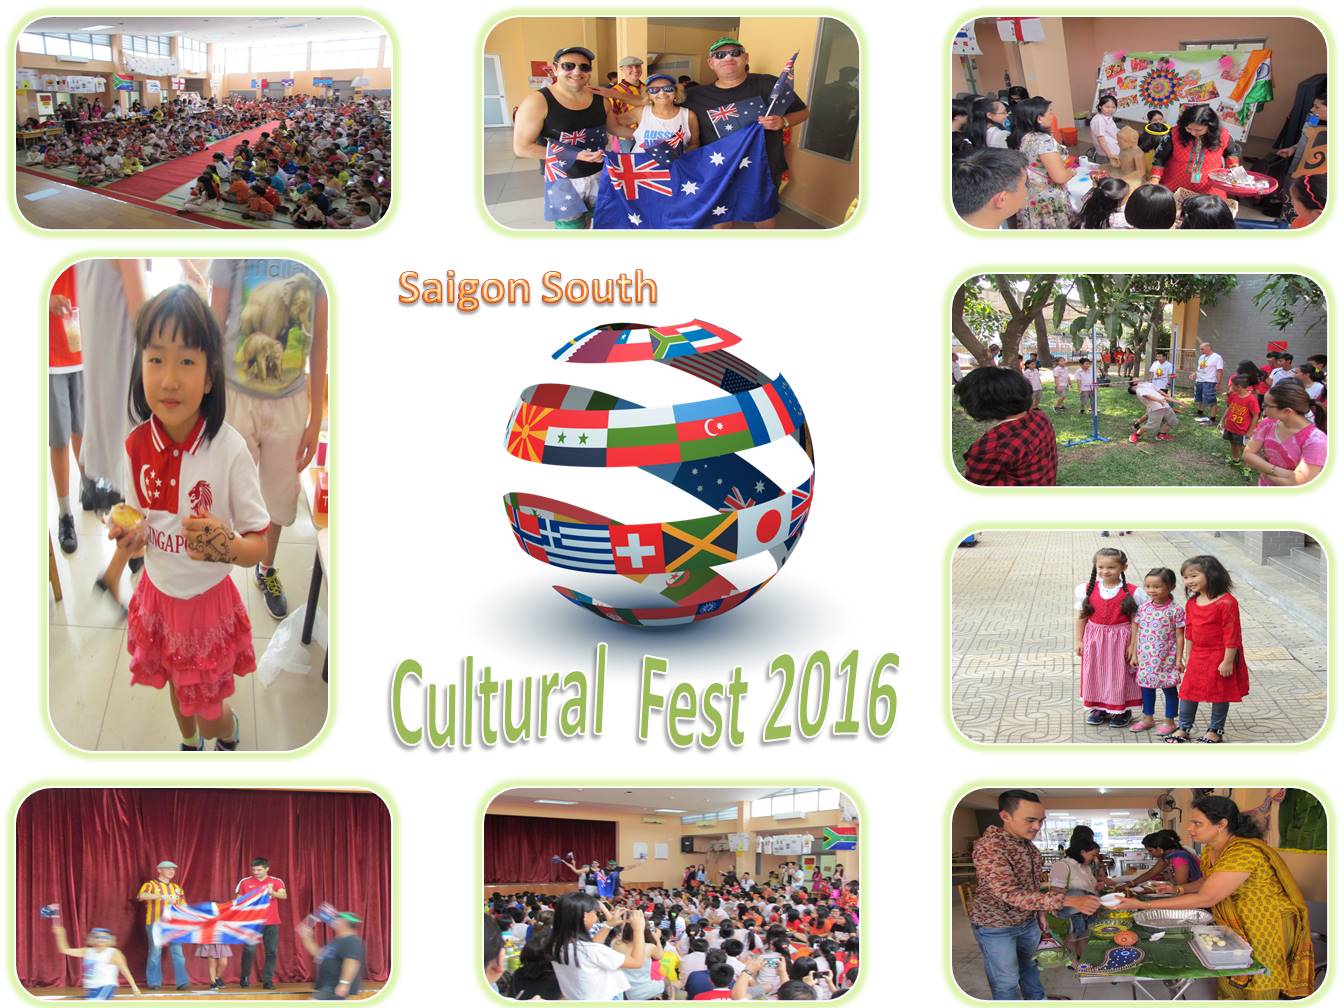 Cultural Fest 2016